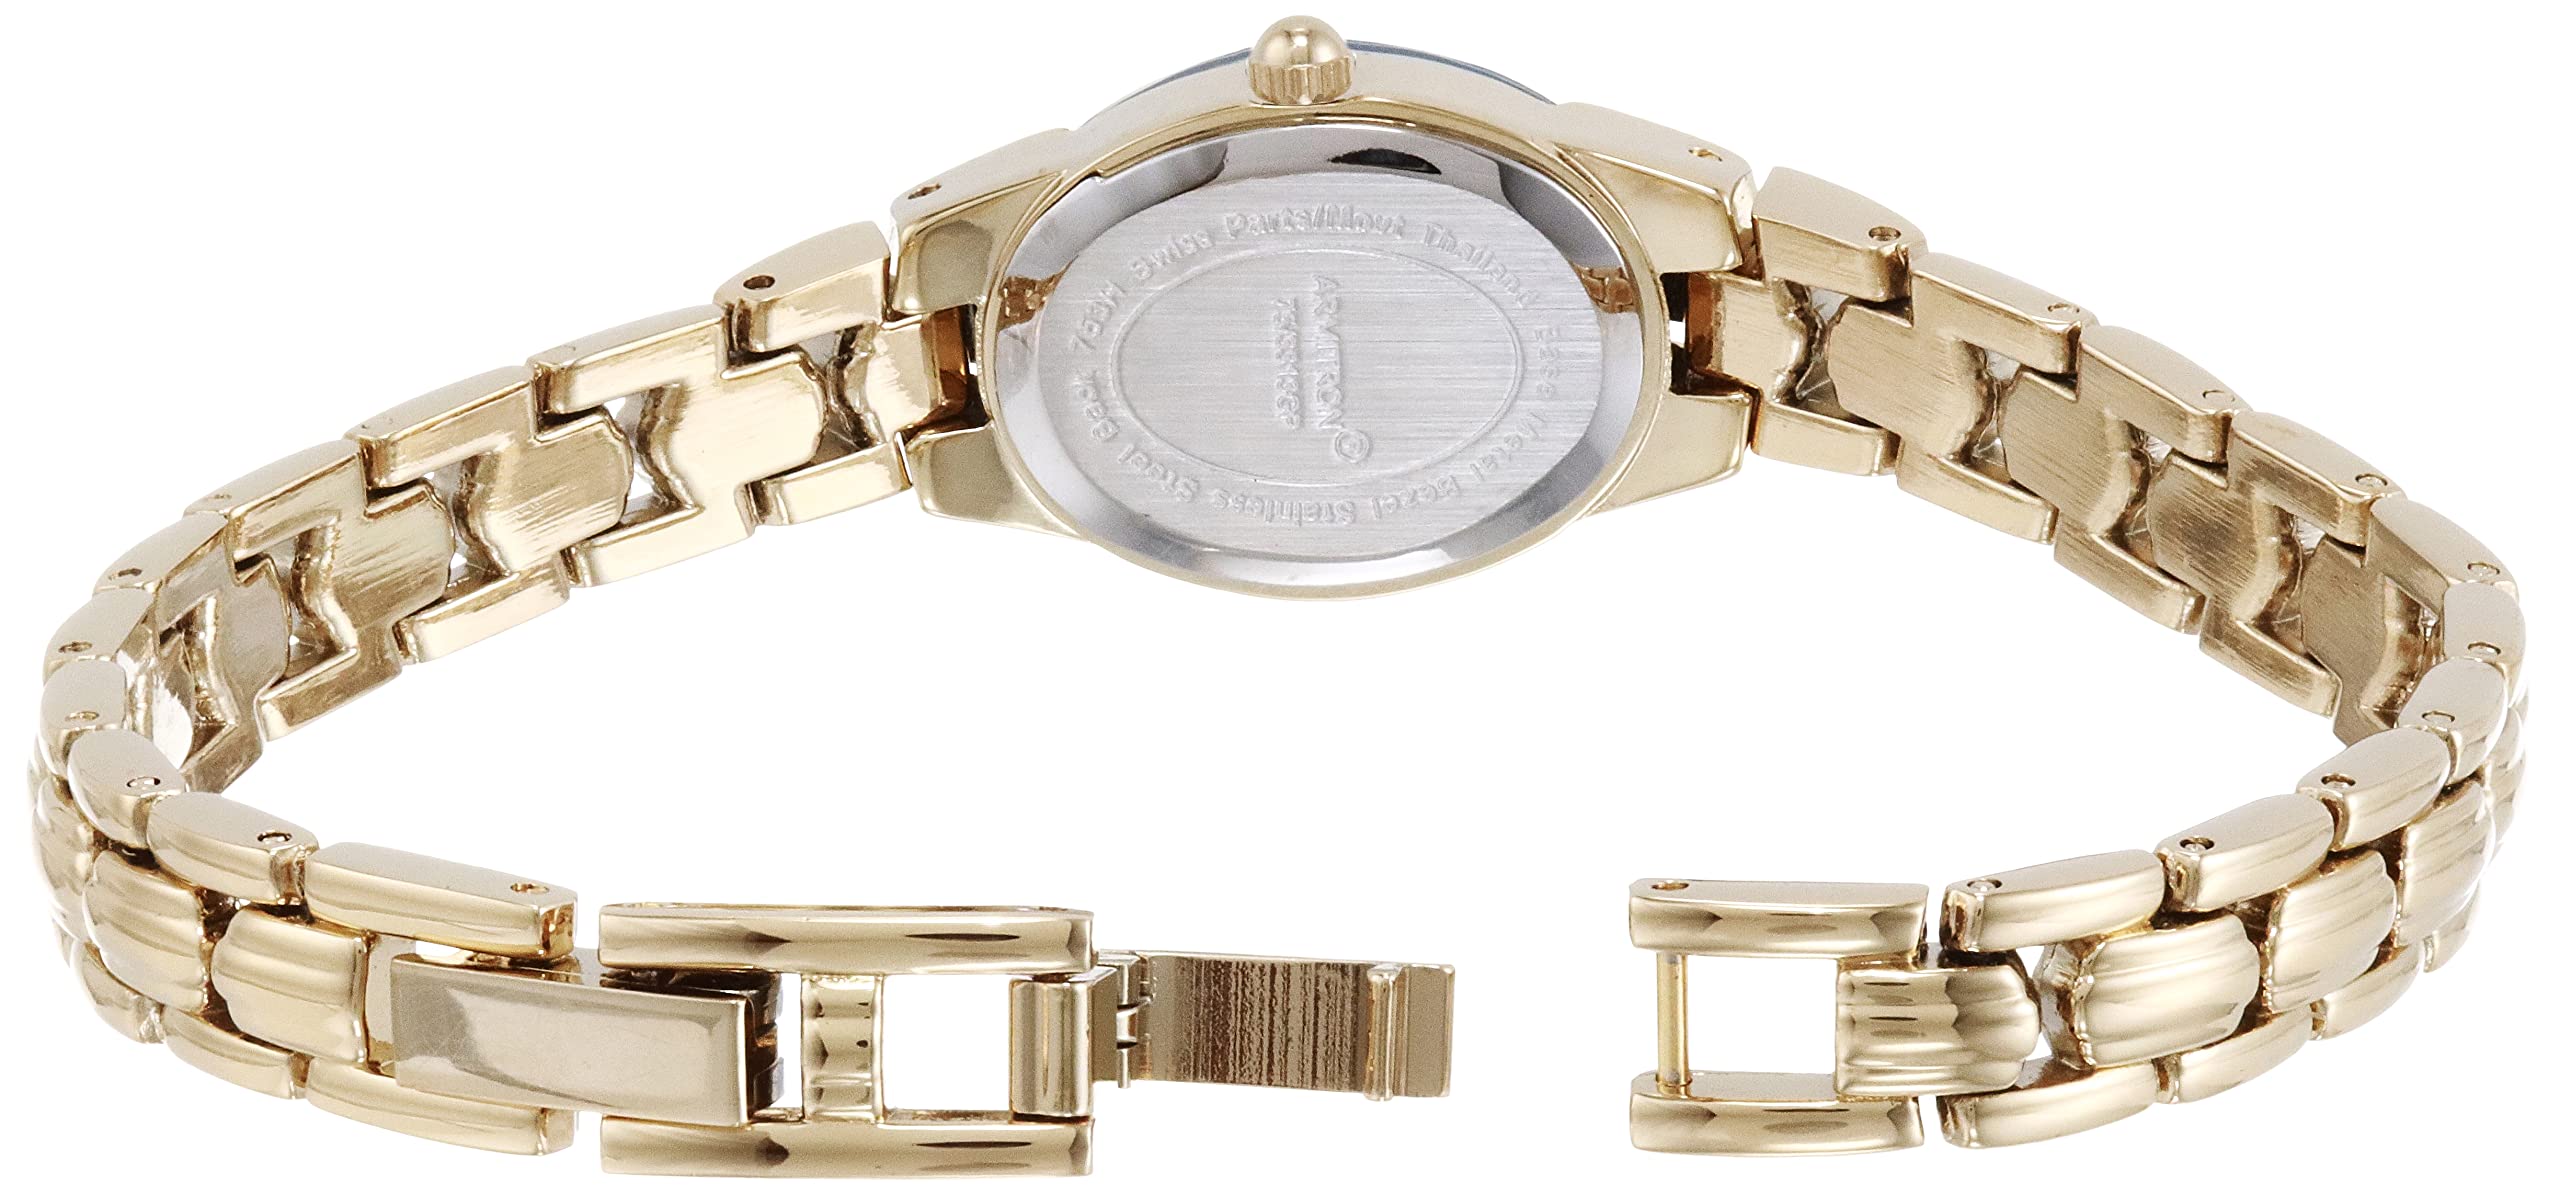 Armitron Women's Bracelet Watch, 75/3313